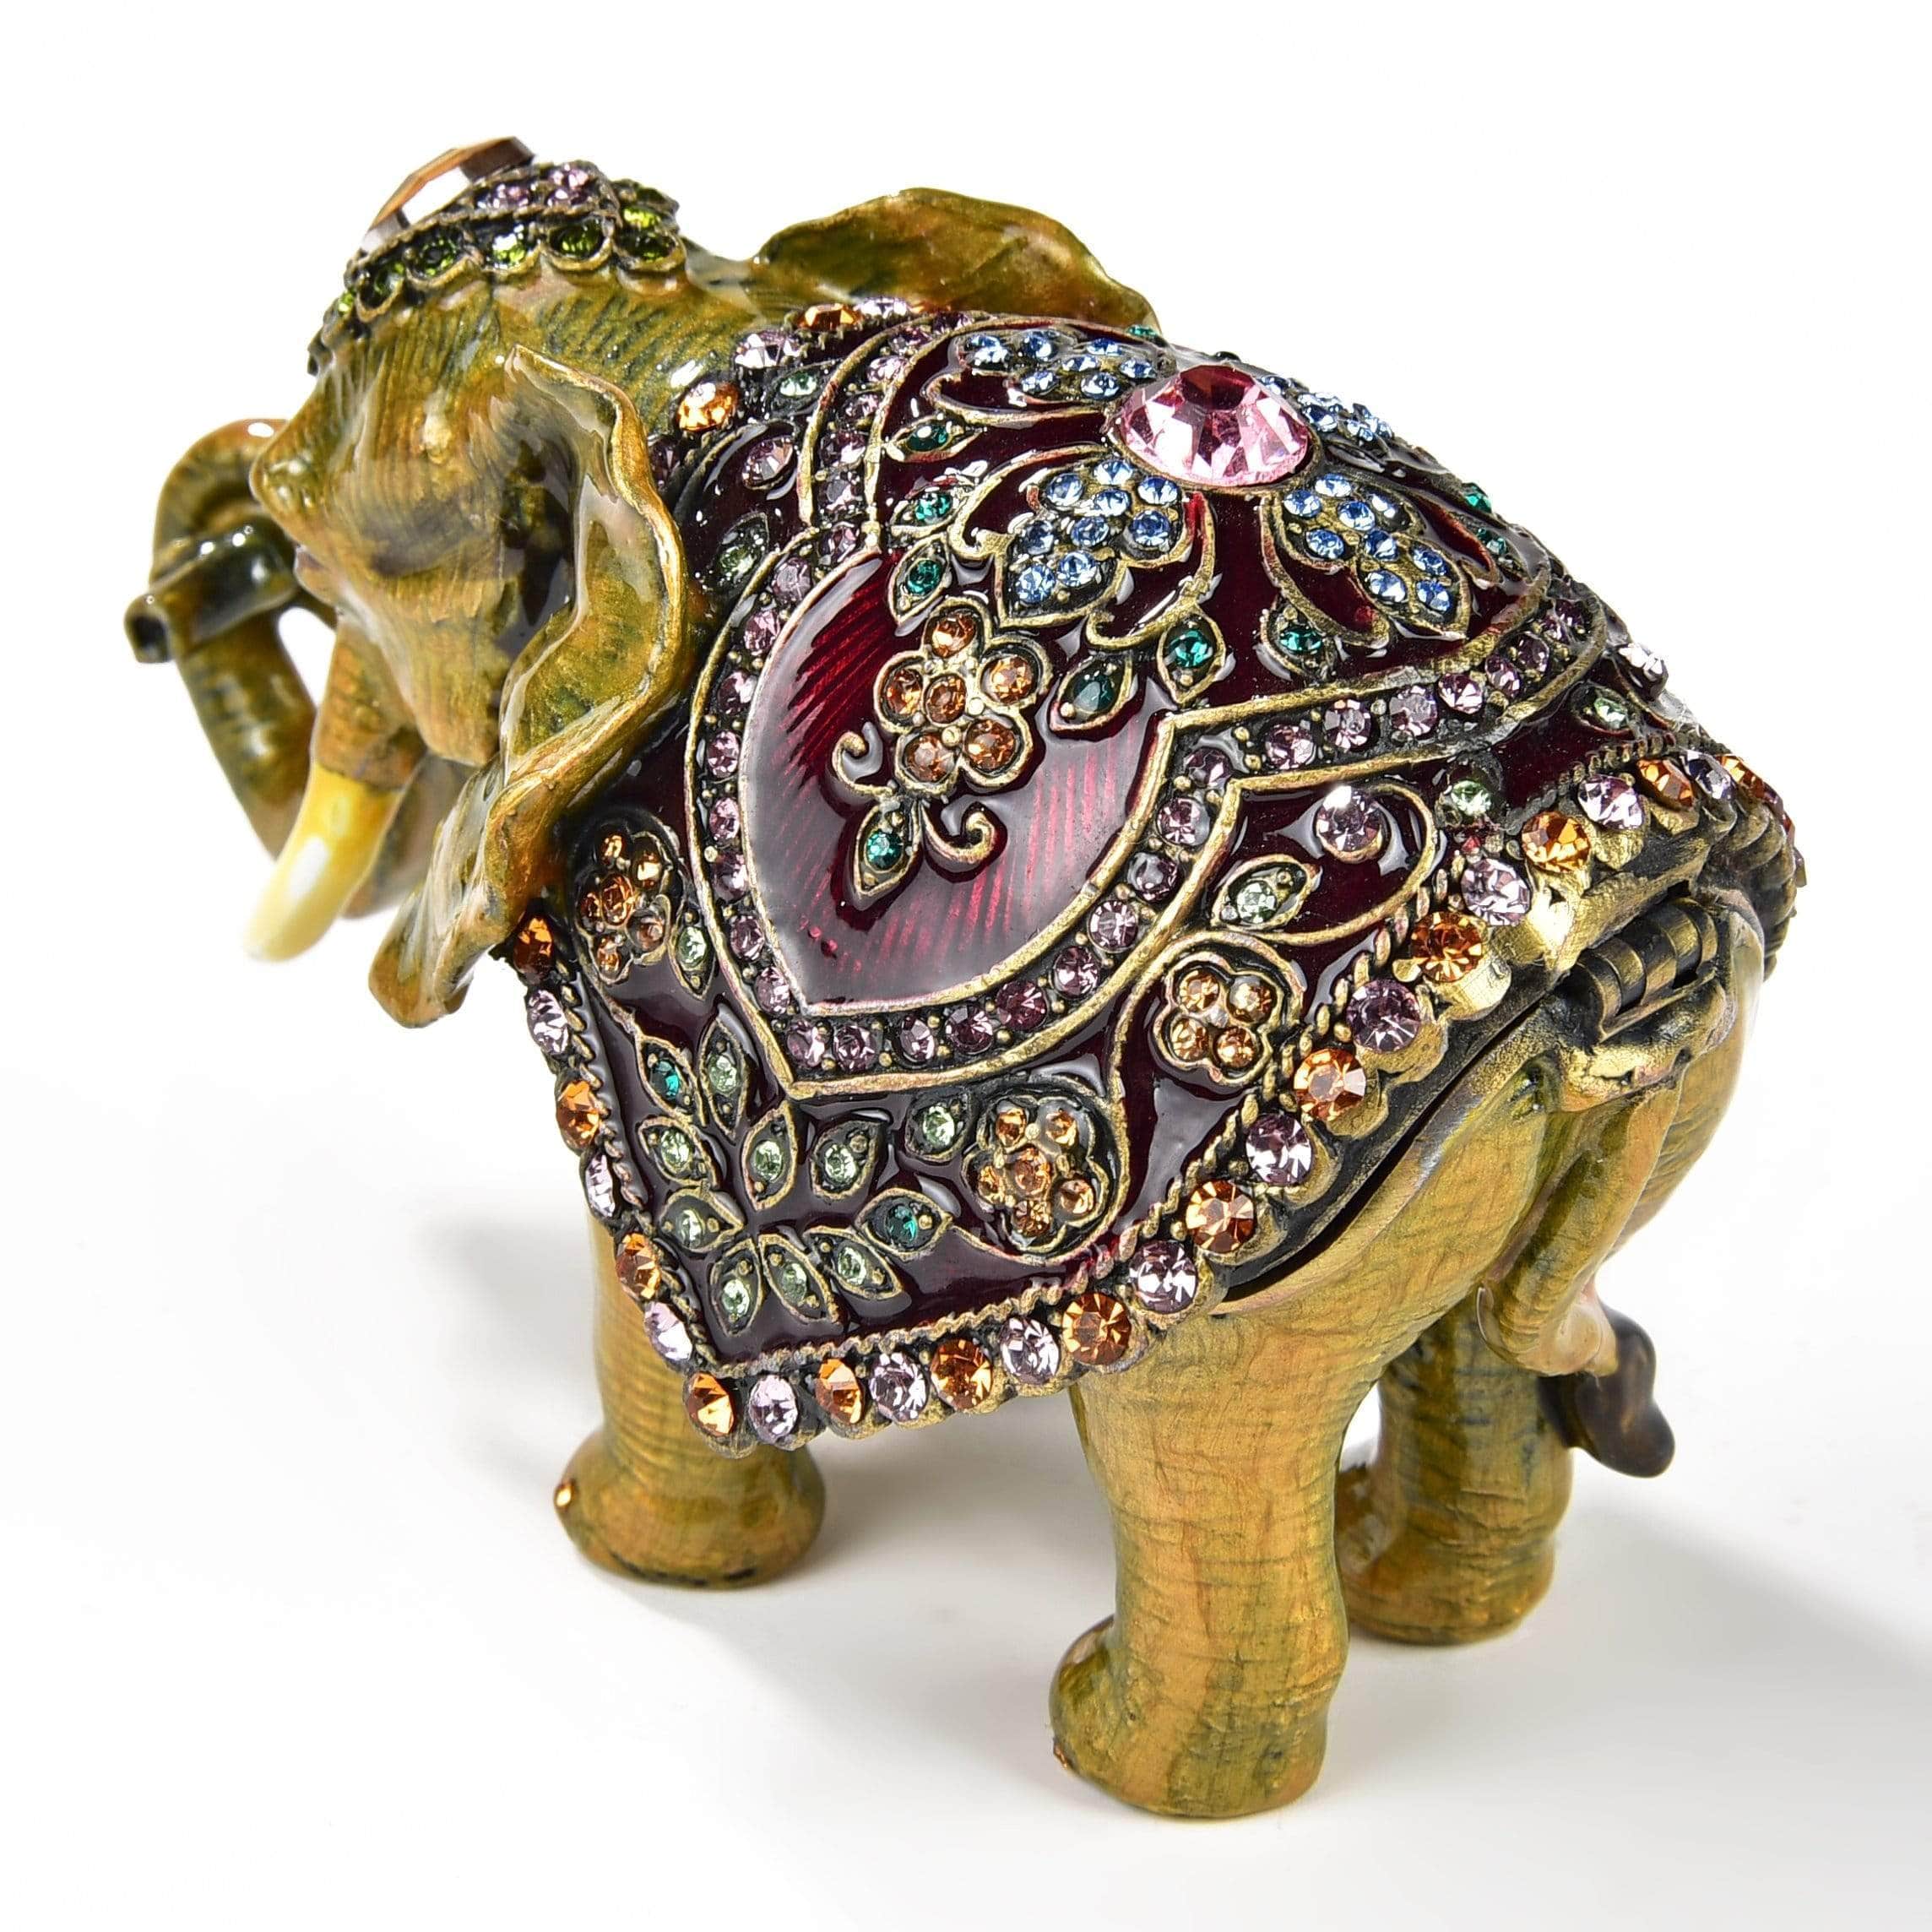 Kalifano Vanity Figurine Amethyst Elephant Figurine Keepsake Box made with Crystals SVA-074